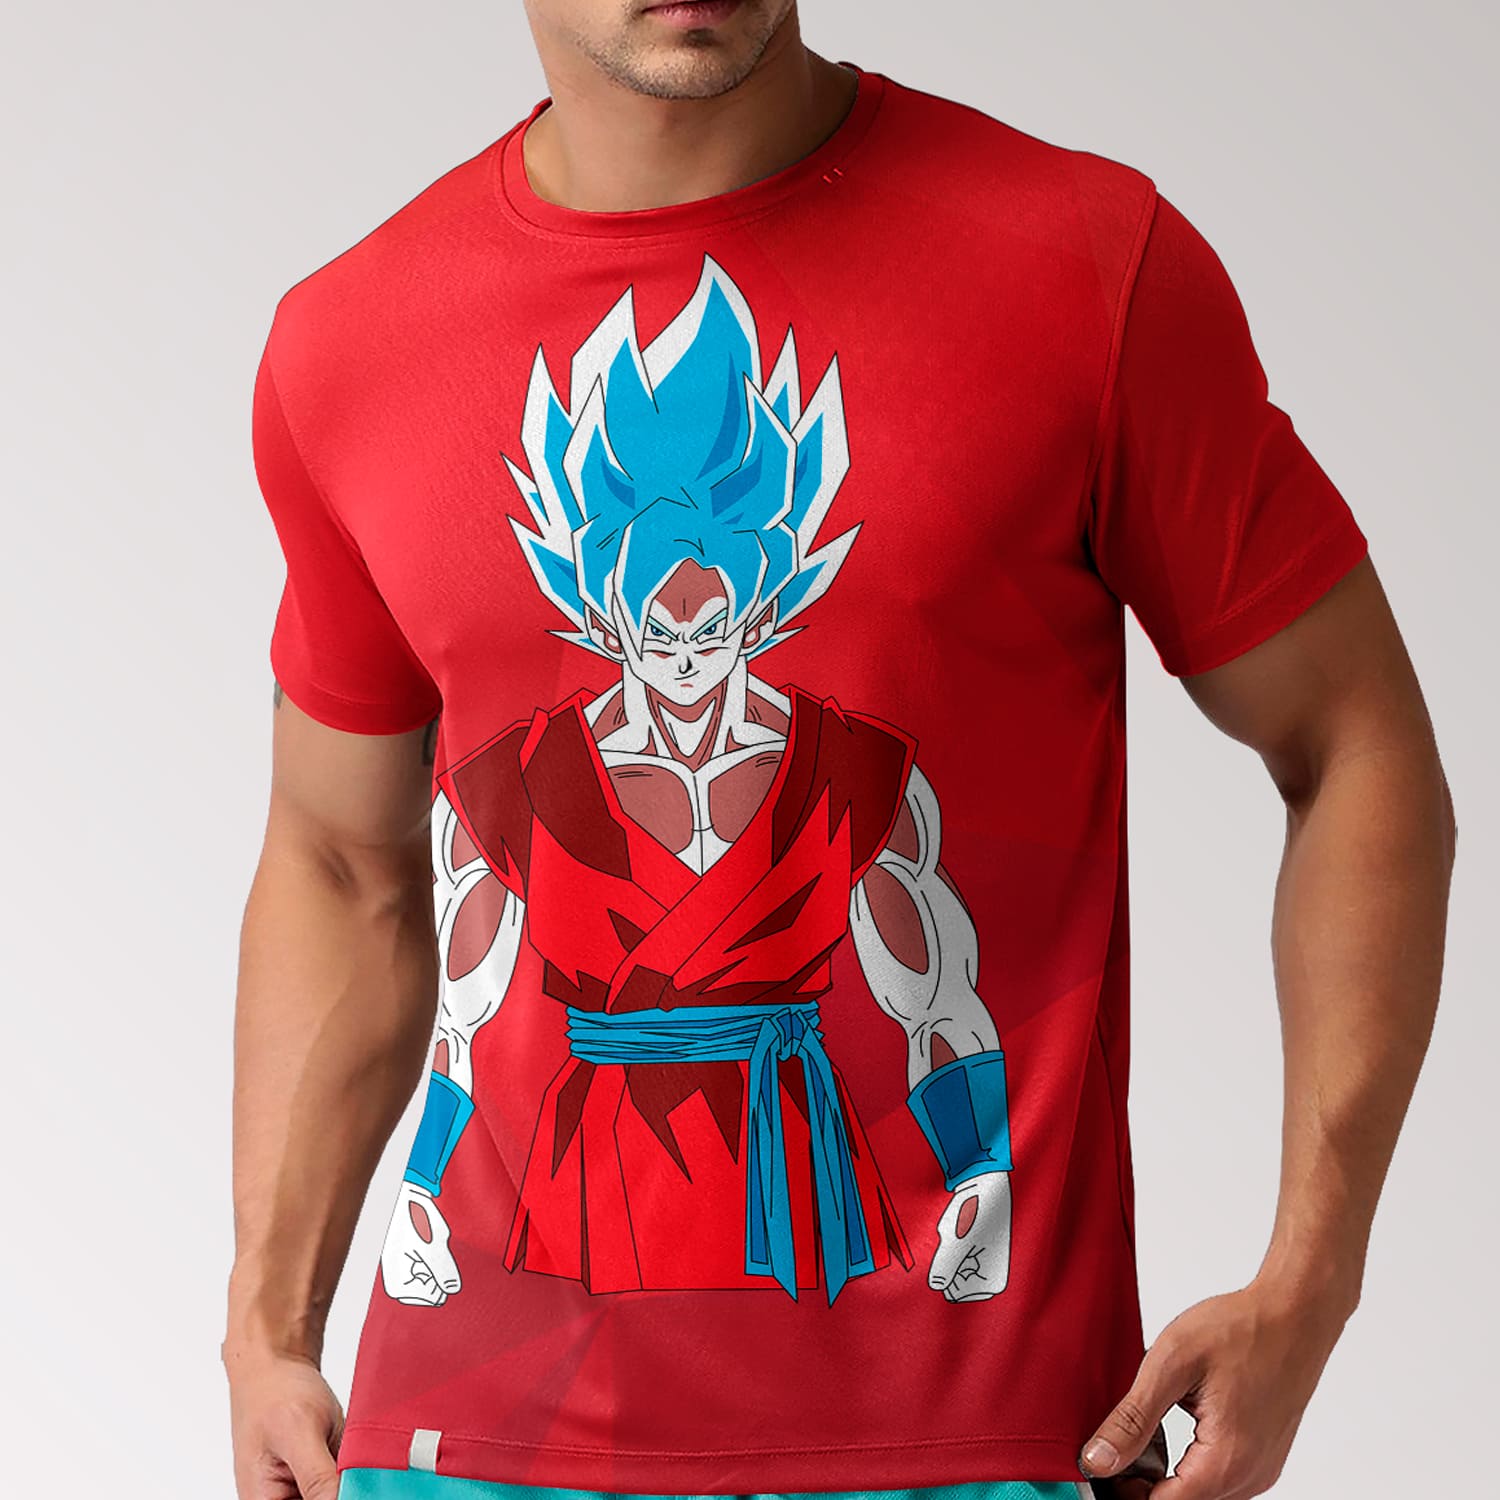 Super Saiyan Goku SVG on the red t-shirt.